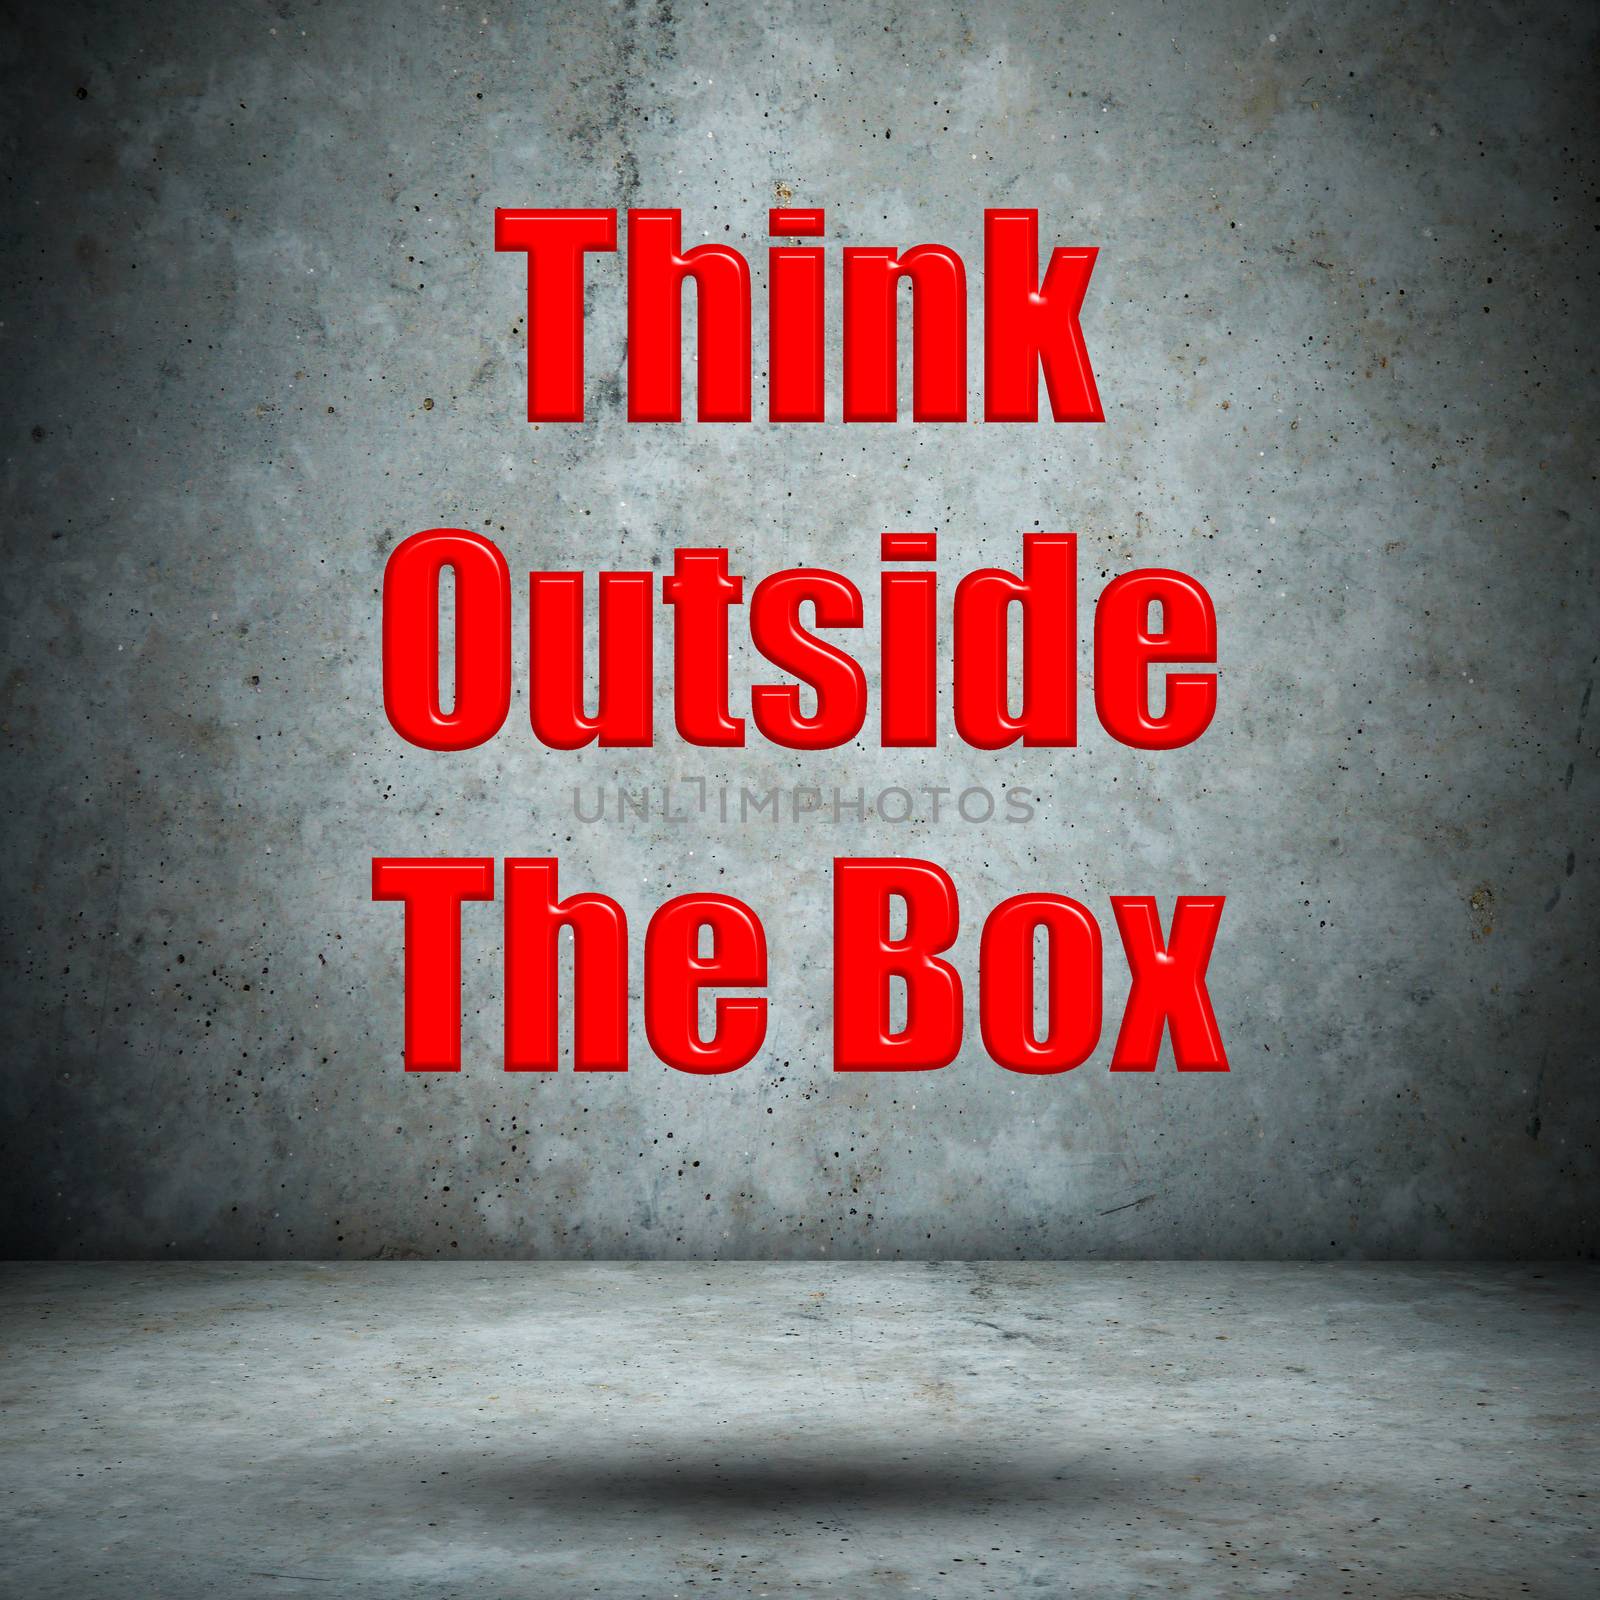 Think Outside The Box concrete wall by tuk69tuk